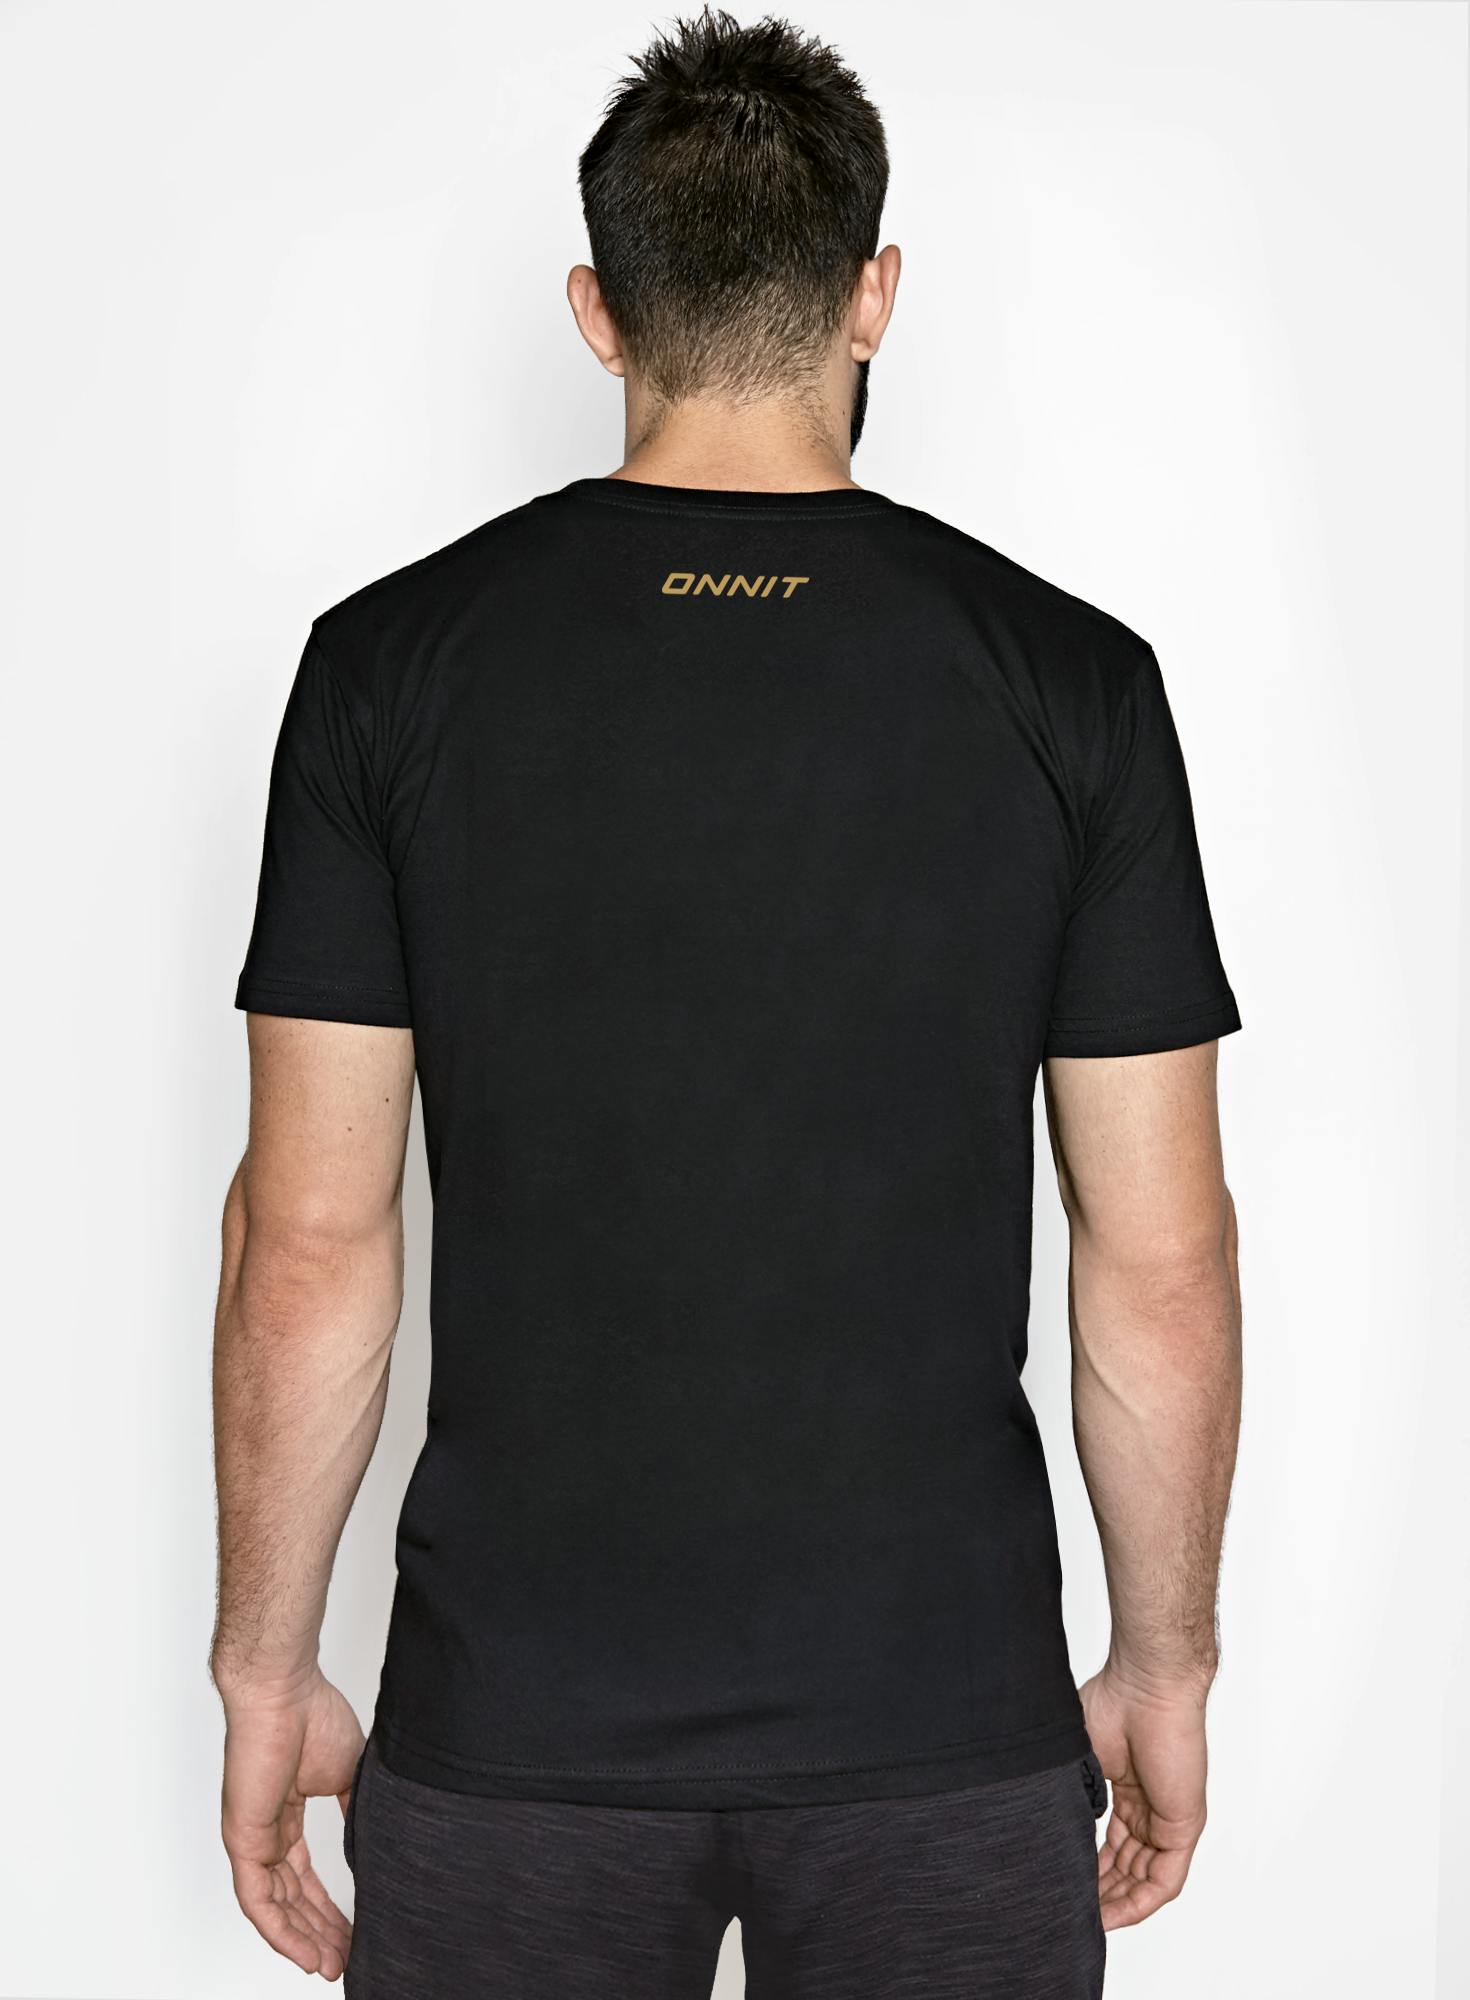 Outlined Banded Helix T-Shirt Bonus Image